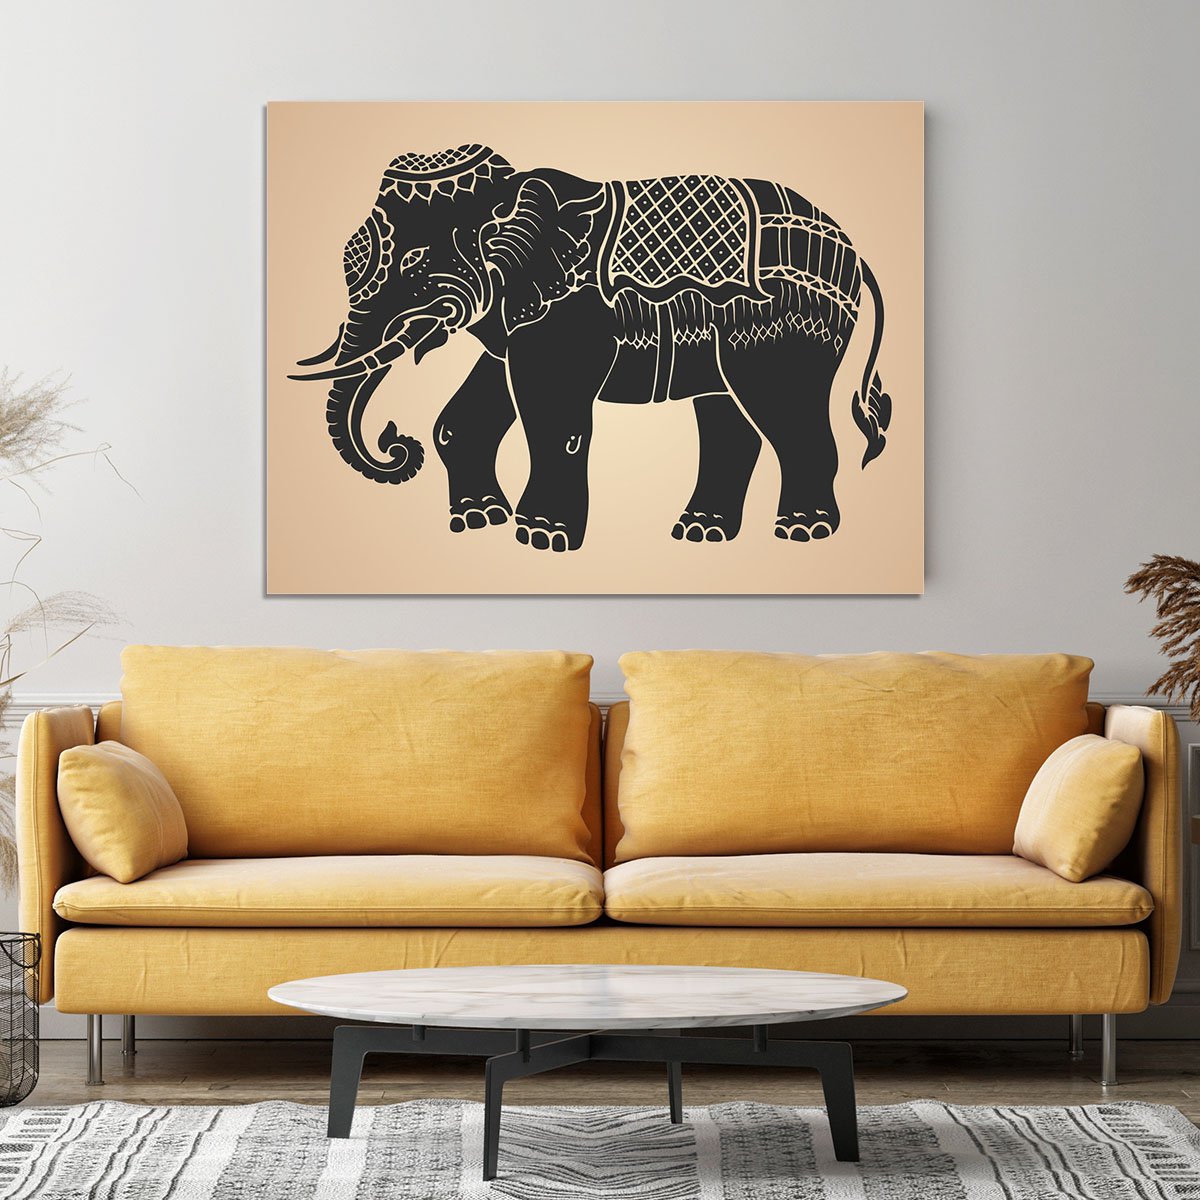 Black war elephant Canvas Print or Poster